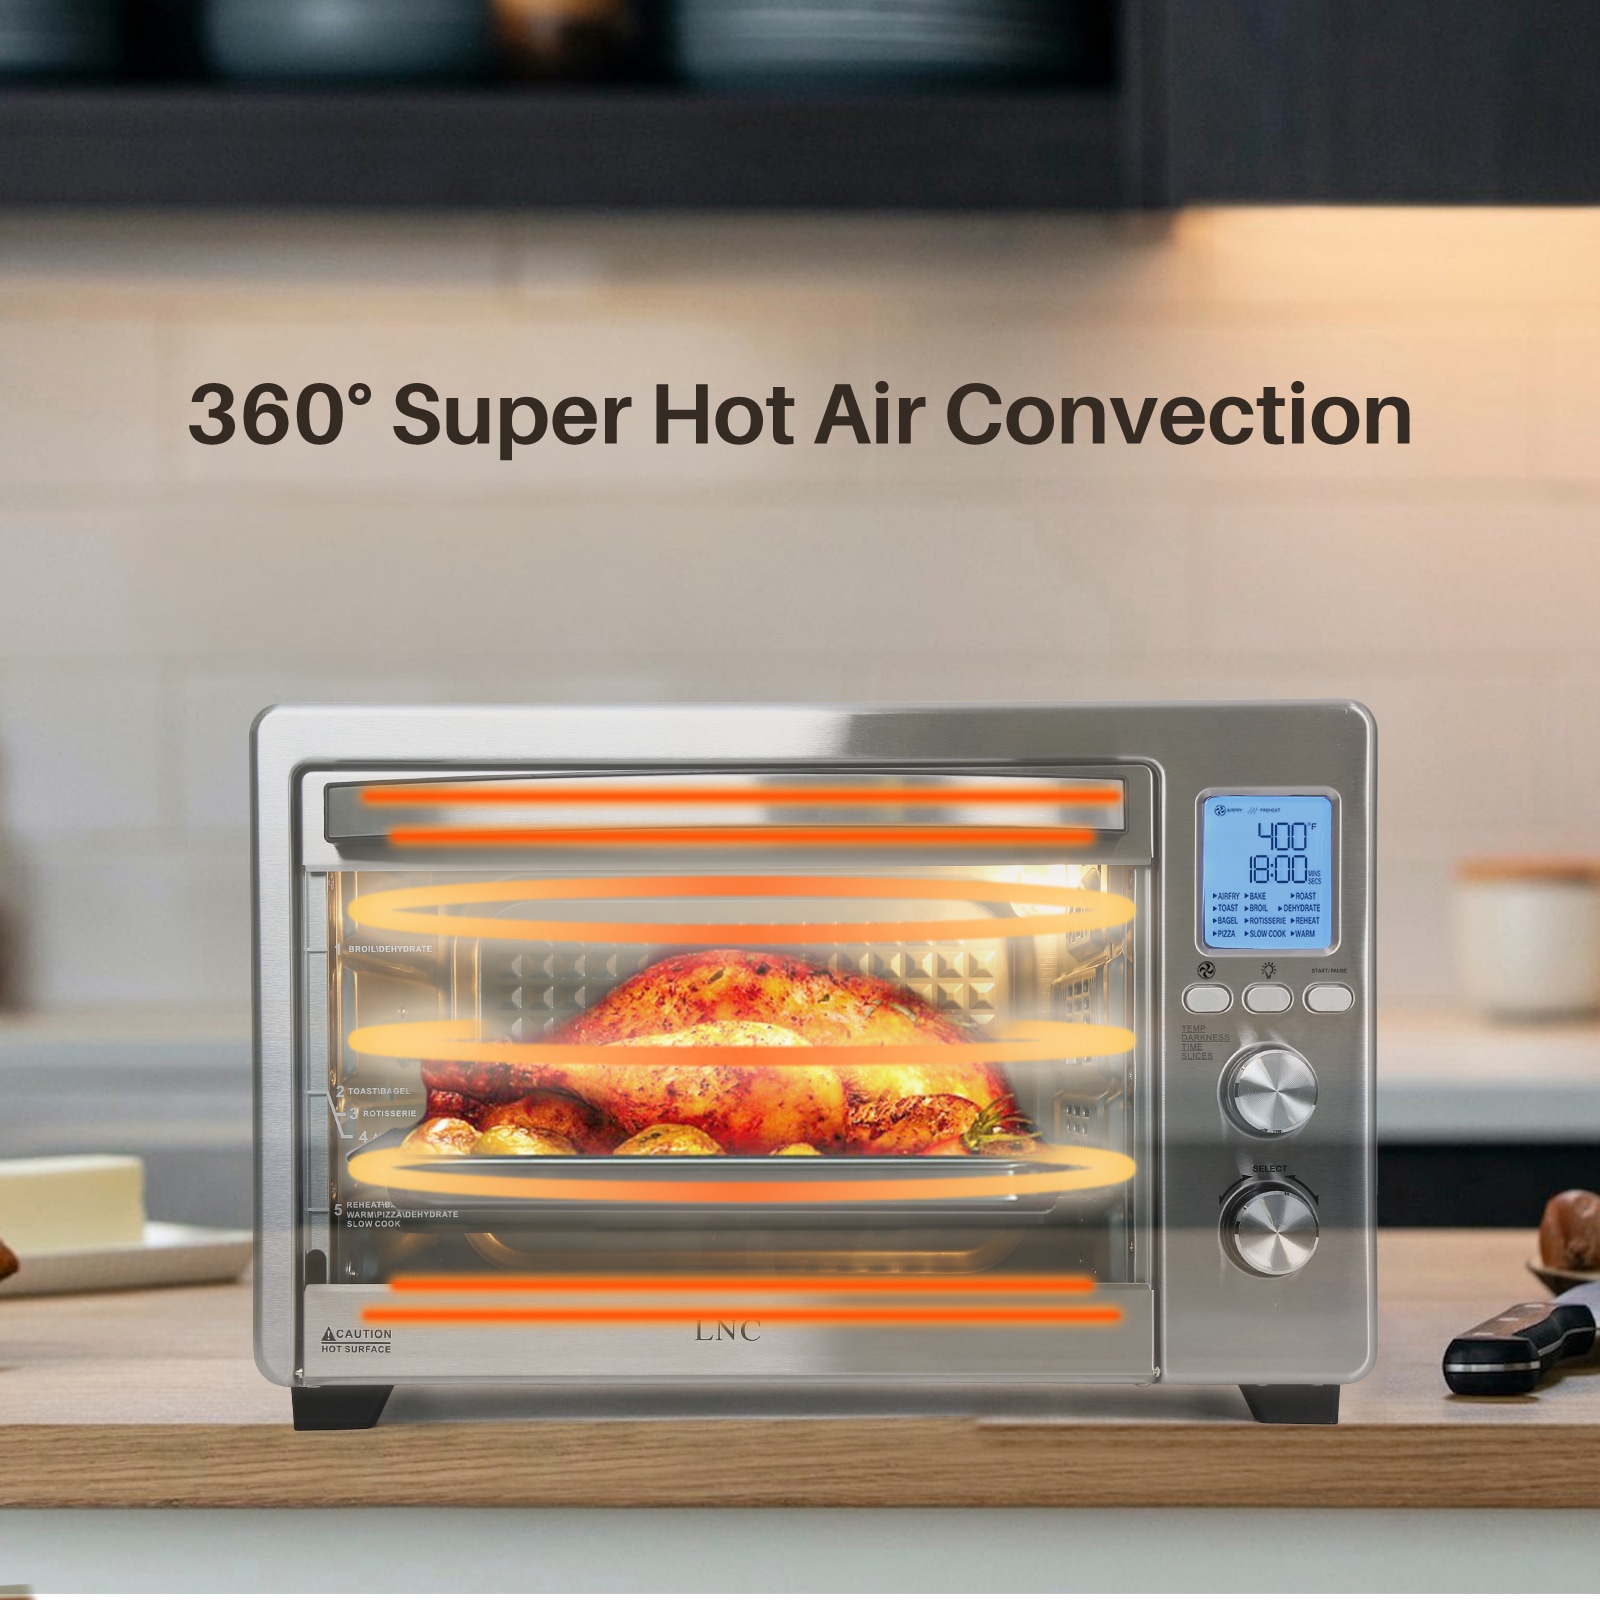 Chefman Digital Air Fryer + Rotisserie Oven, 6.3 Qt Capacity,  Multi-Function, Black